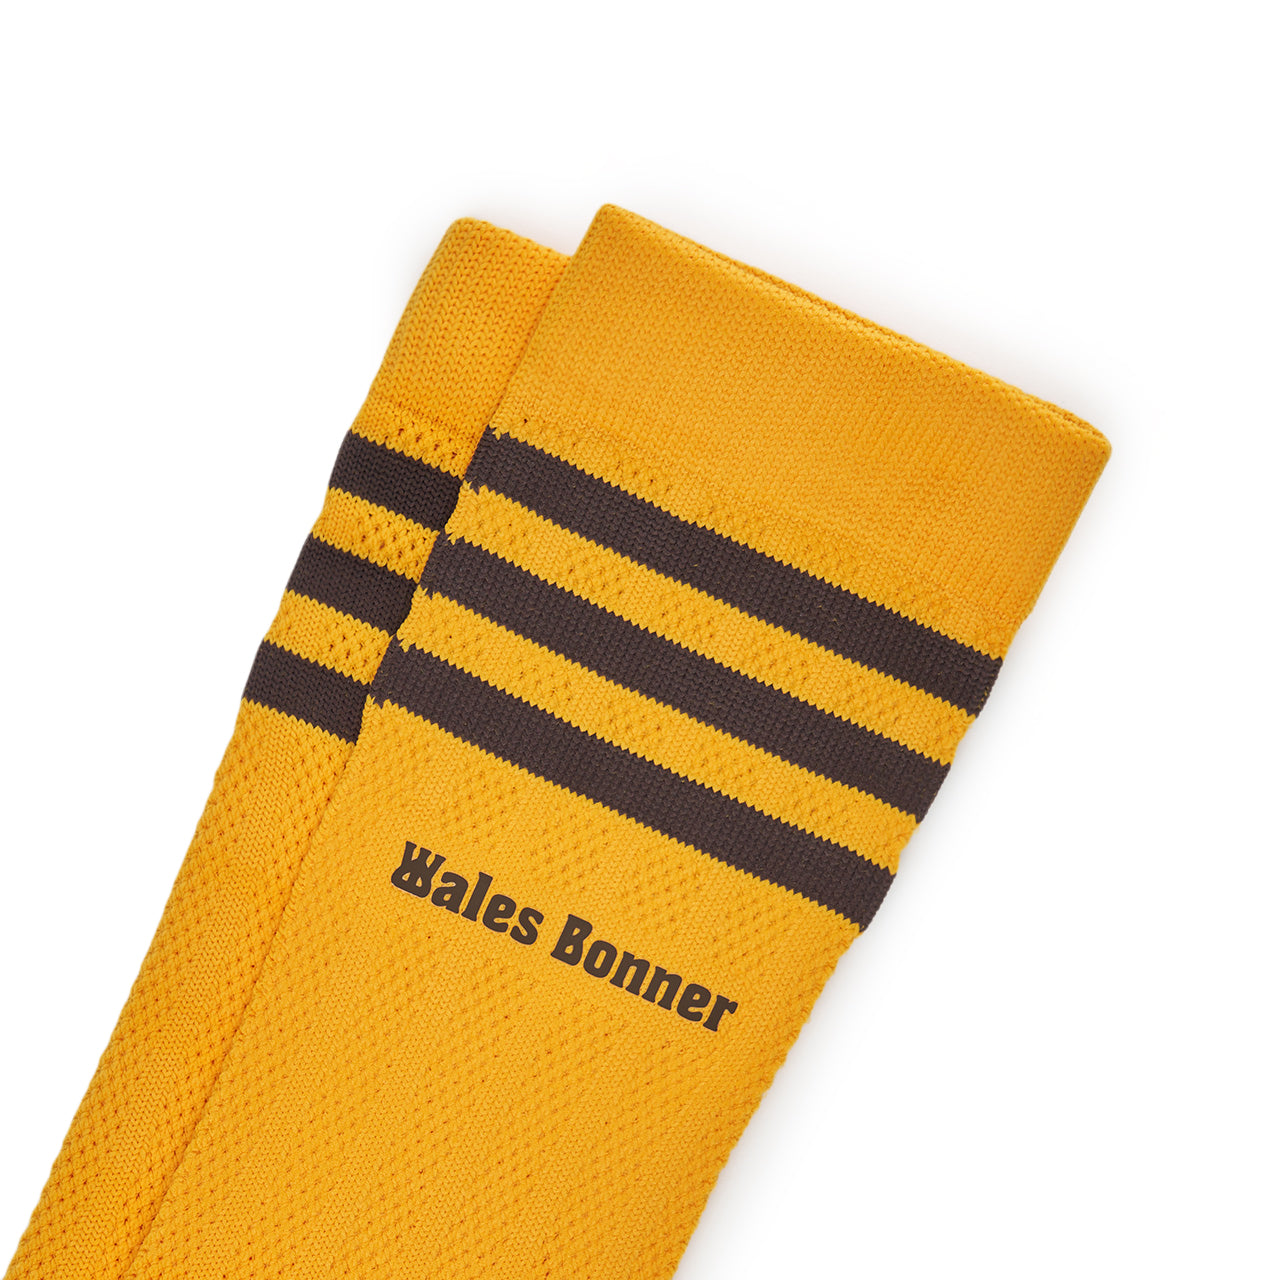 adidas x wales bonner crochet socks 3-pack (mint / yellow / brown)